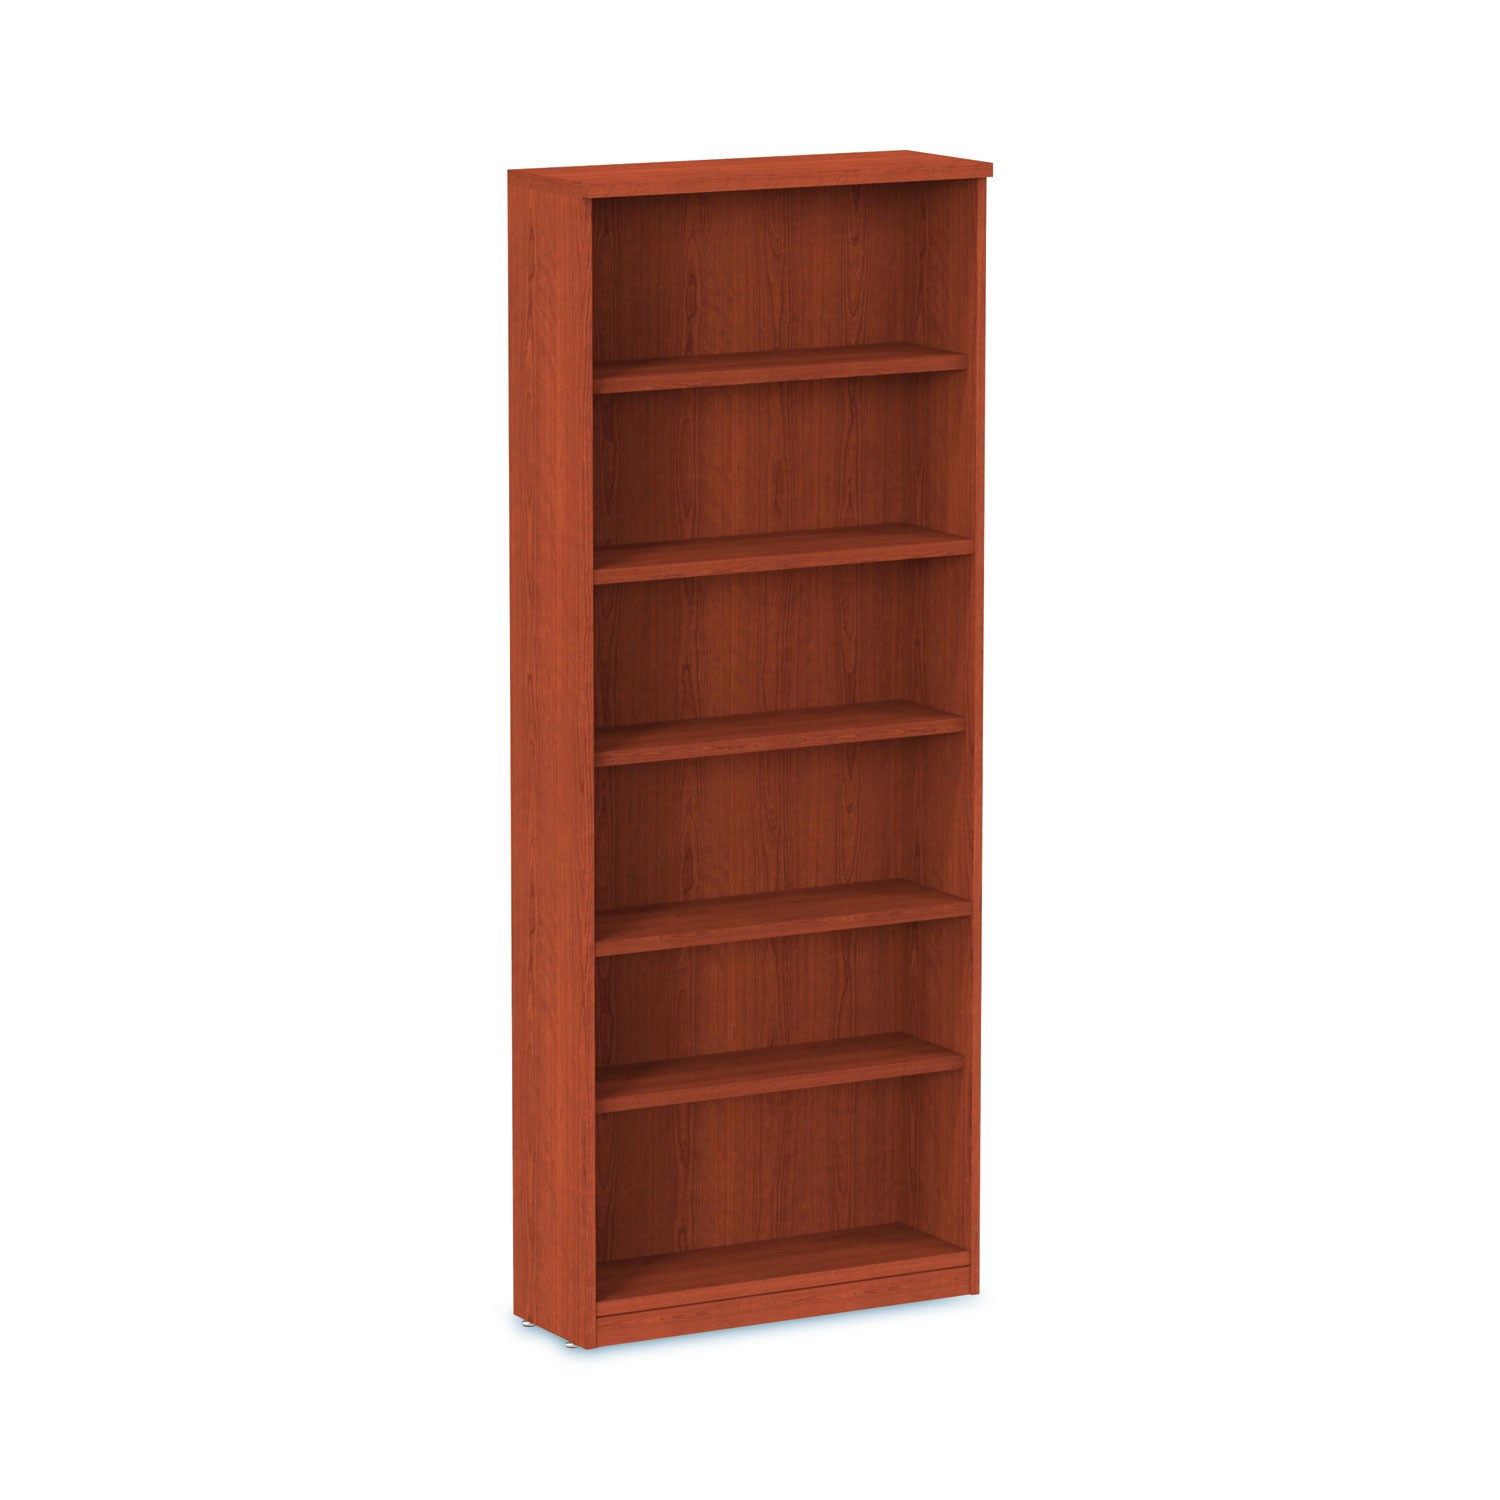 Alera Valencia Series Bookcase, Six-Shelf, 31.75w x 14d x 80.25h, Medium Cherry - 